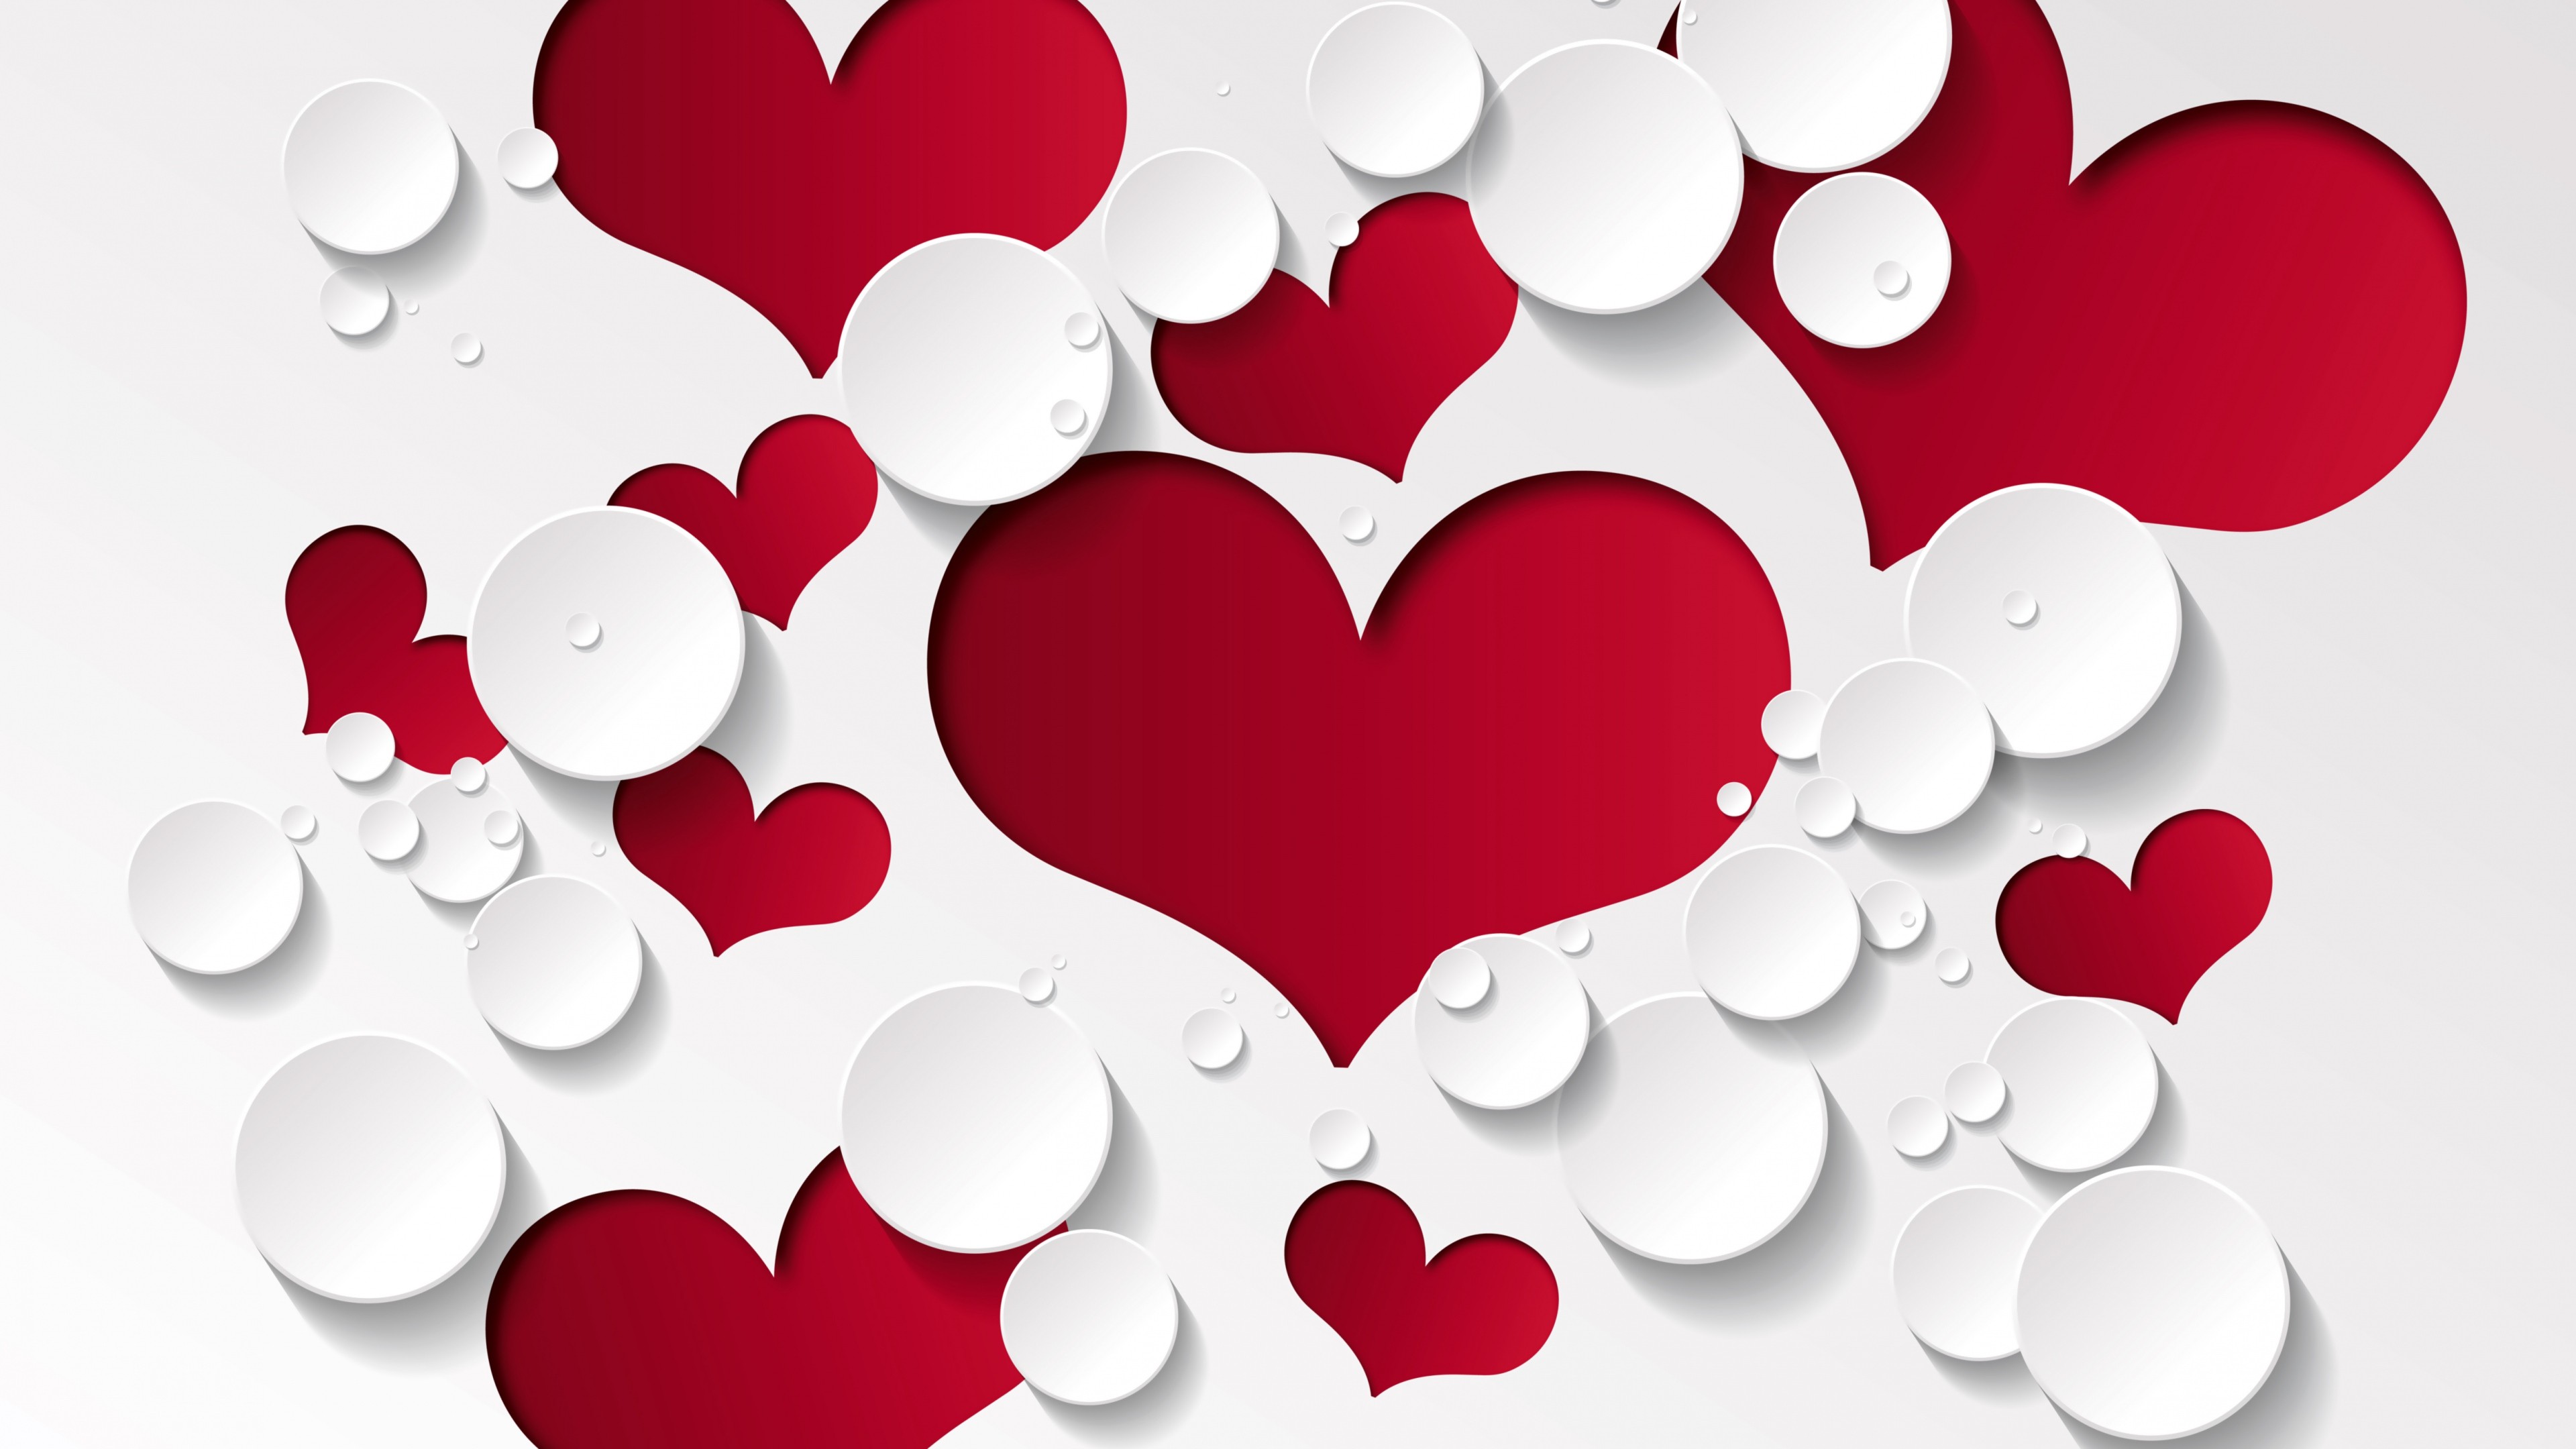 Heart wallpaper ·① Download free cool full HD wallpapers ...